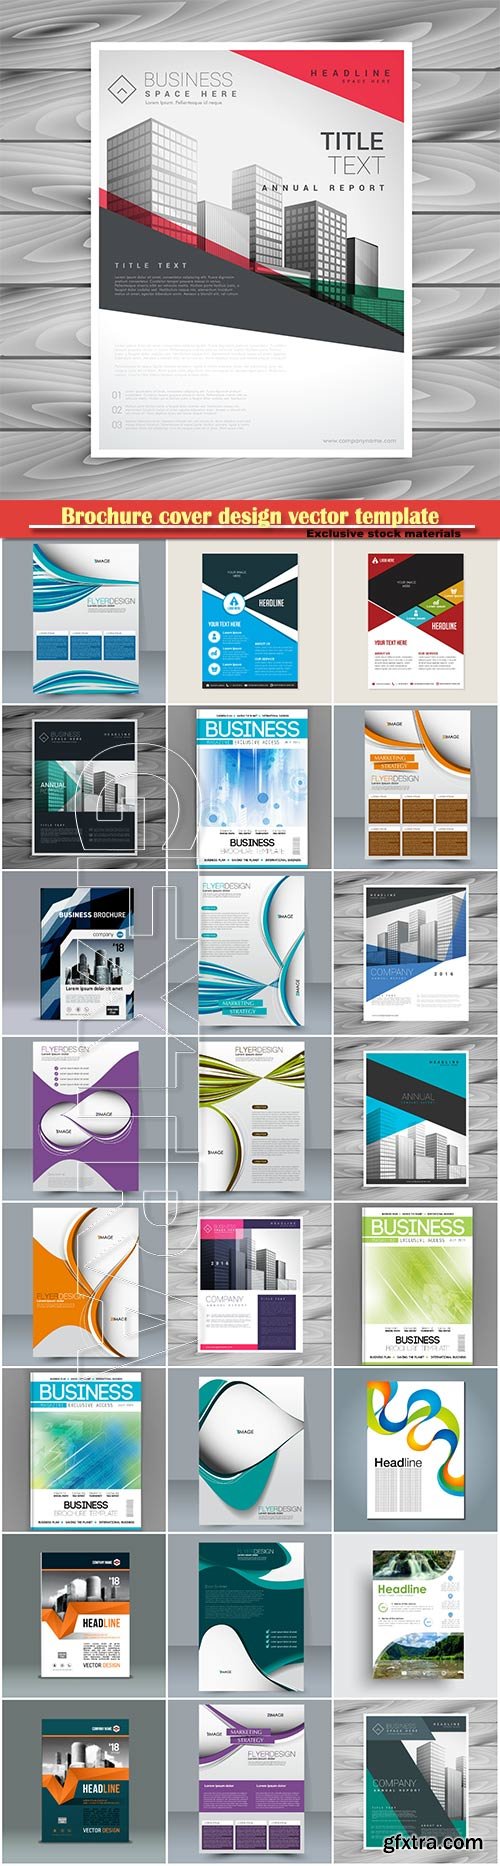 Brochure cover design vector template # 19